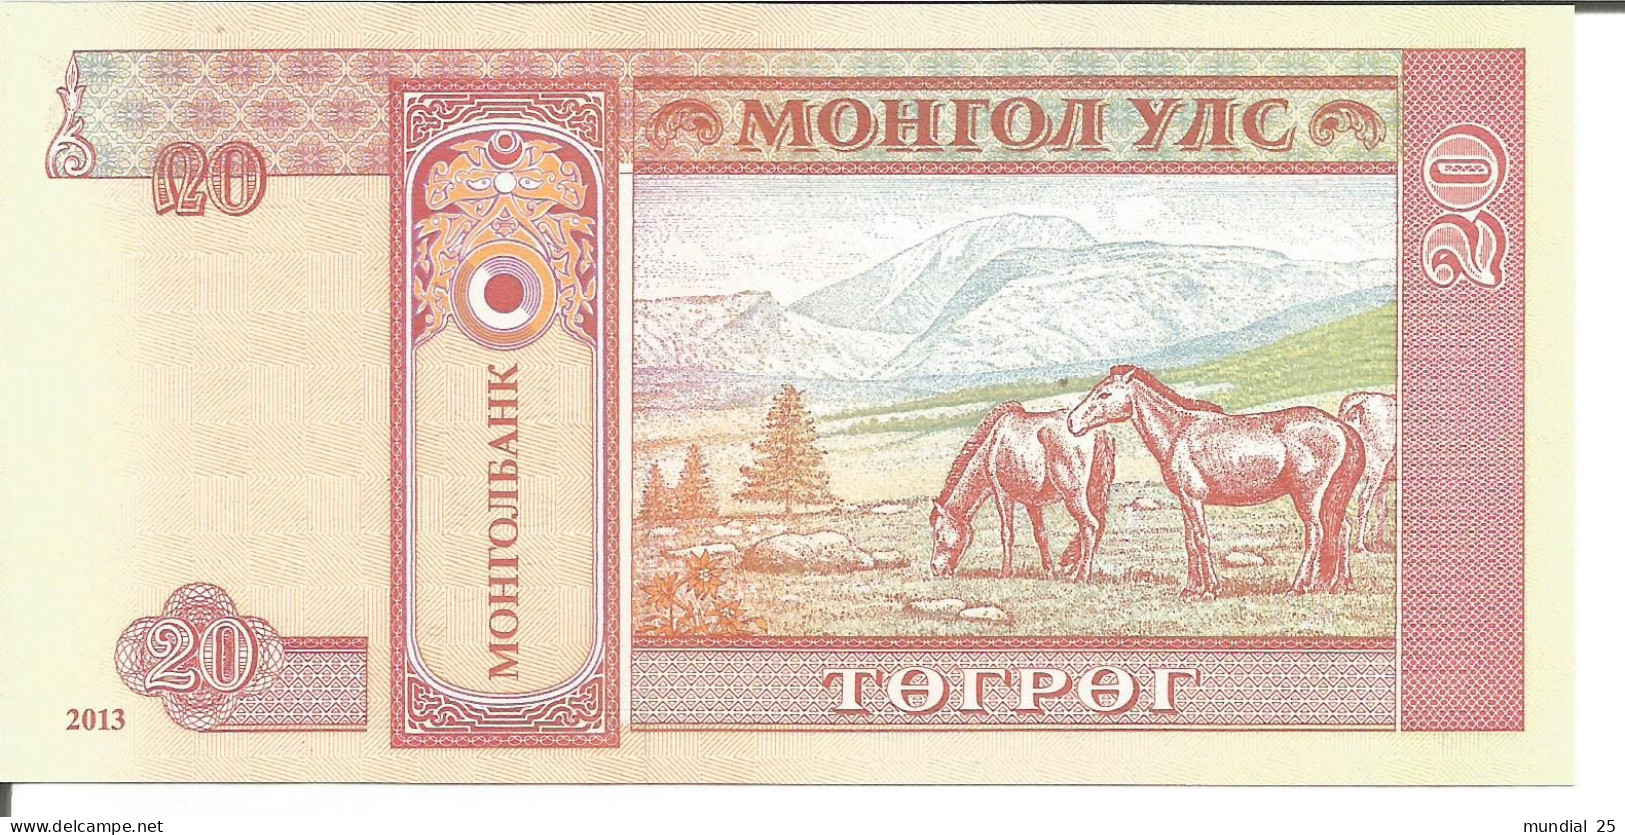 3 MONGOLIA NOTES 20 TUGRIK 2013 - Mongolei